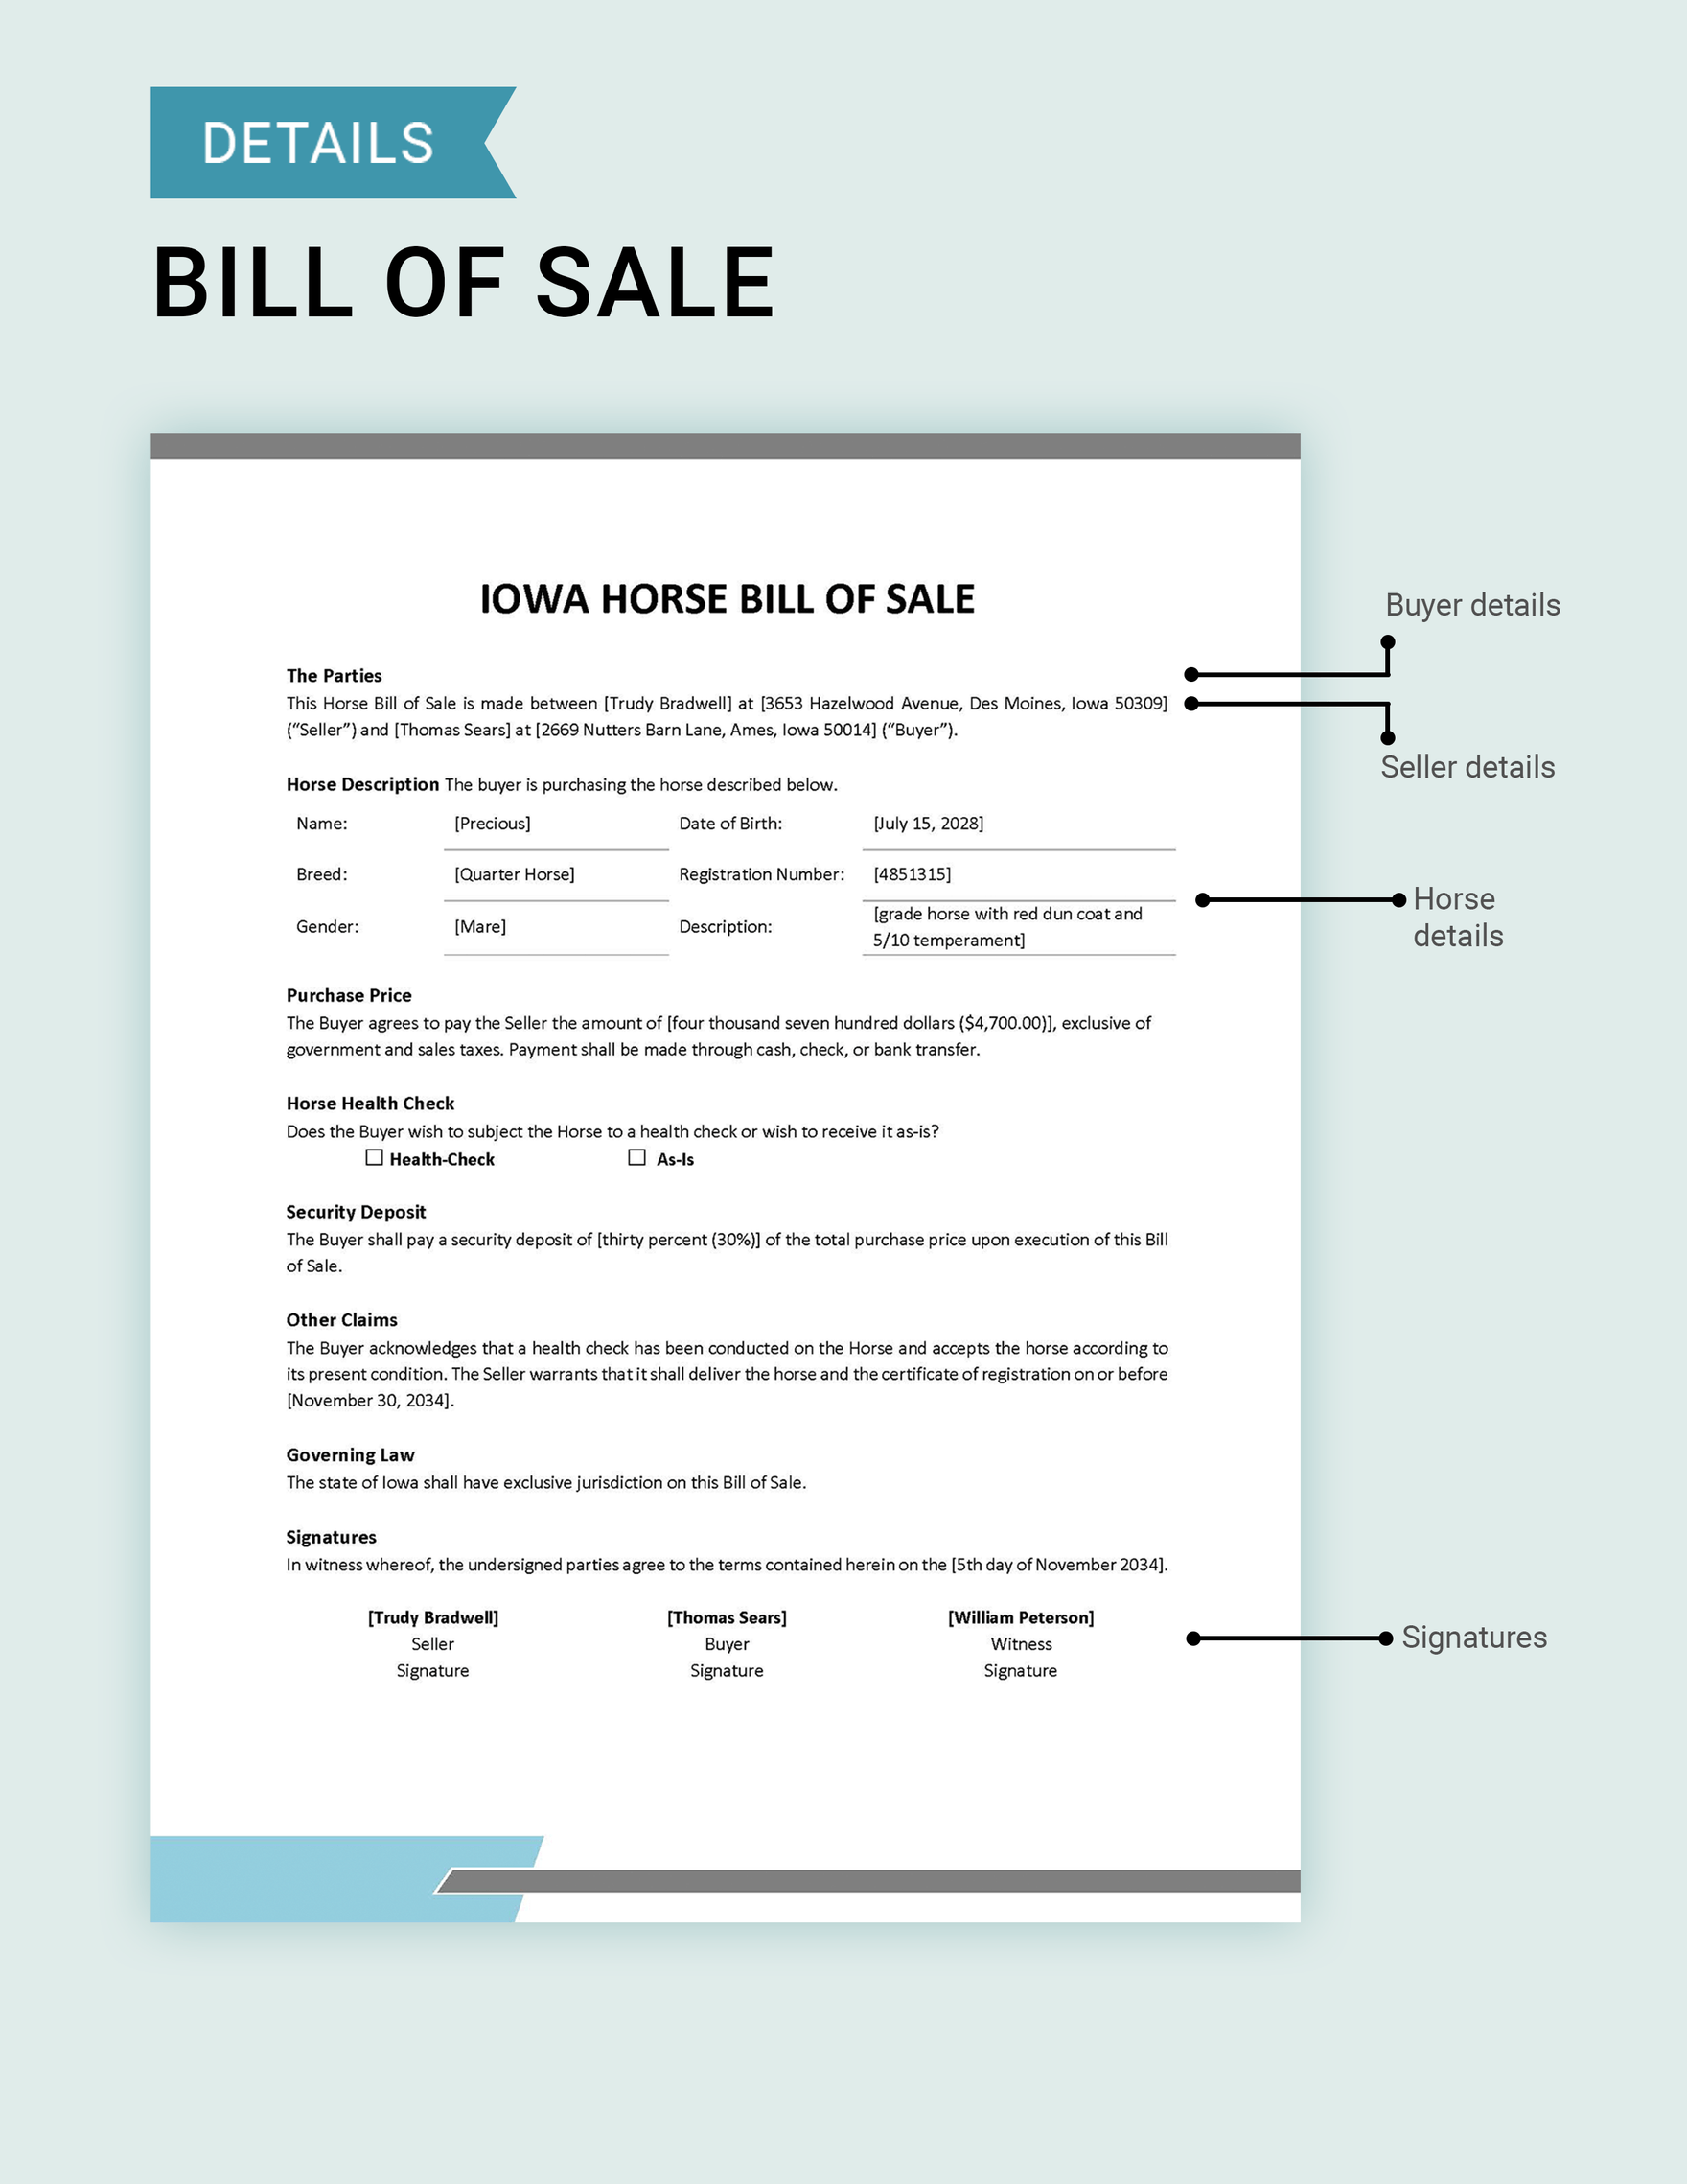 Iowa Horse Bill of Sale Template